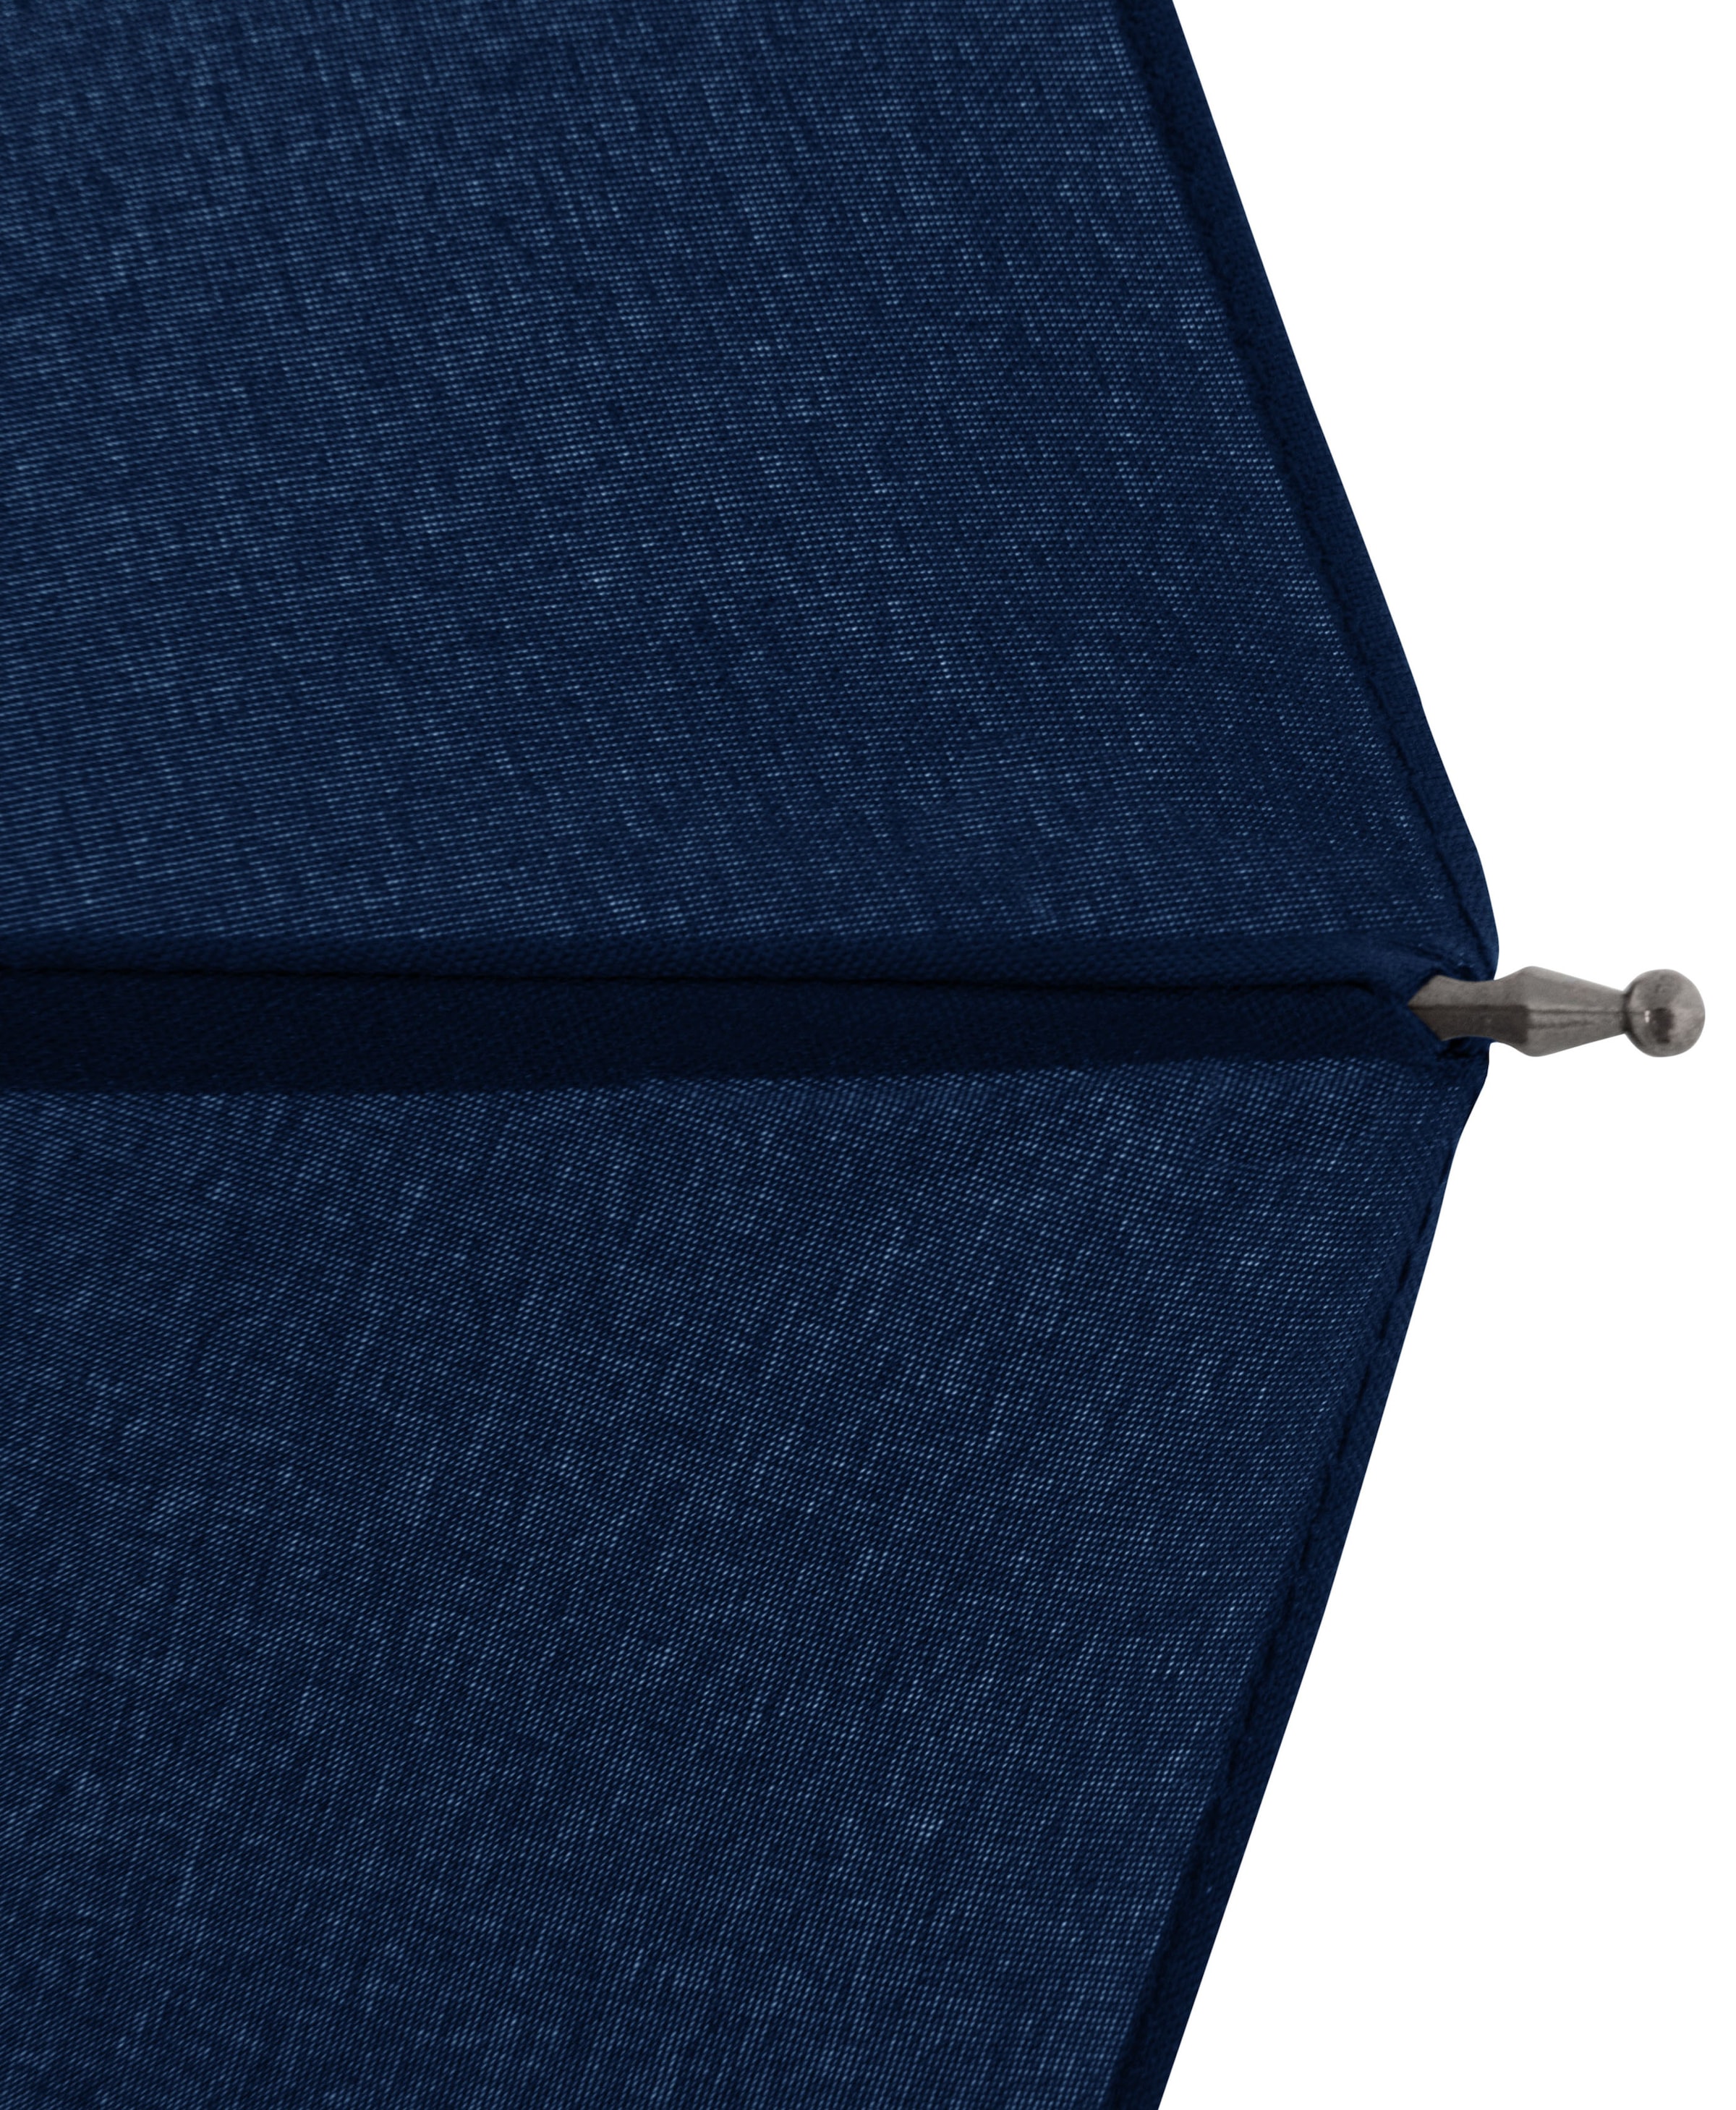 | Taschenregenschirm uni bestellen Superstrong, doppler® »Fiber Magic navy« BAUR